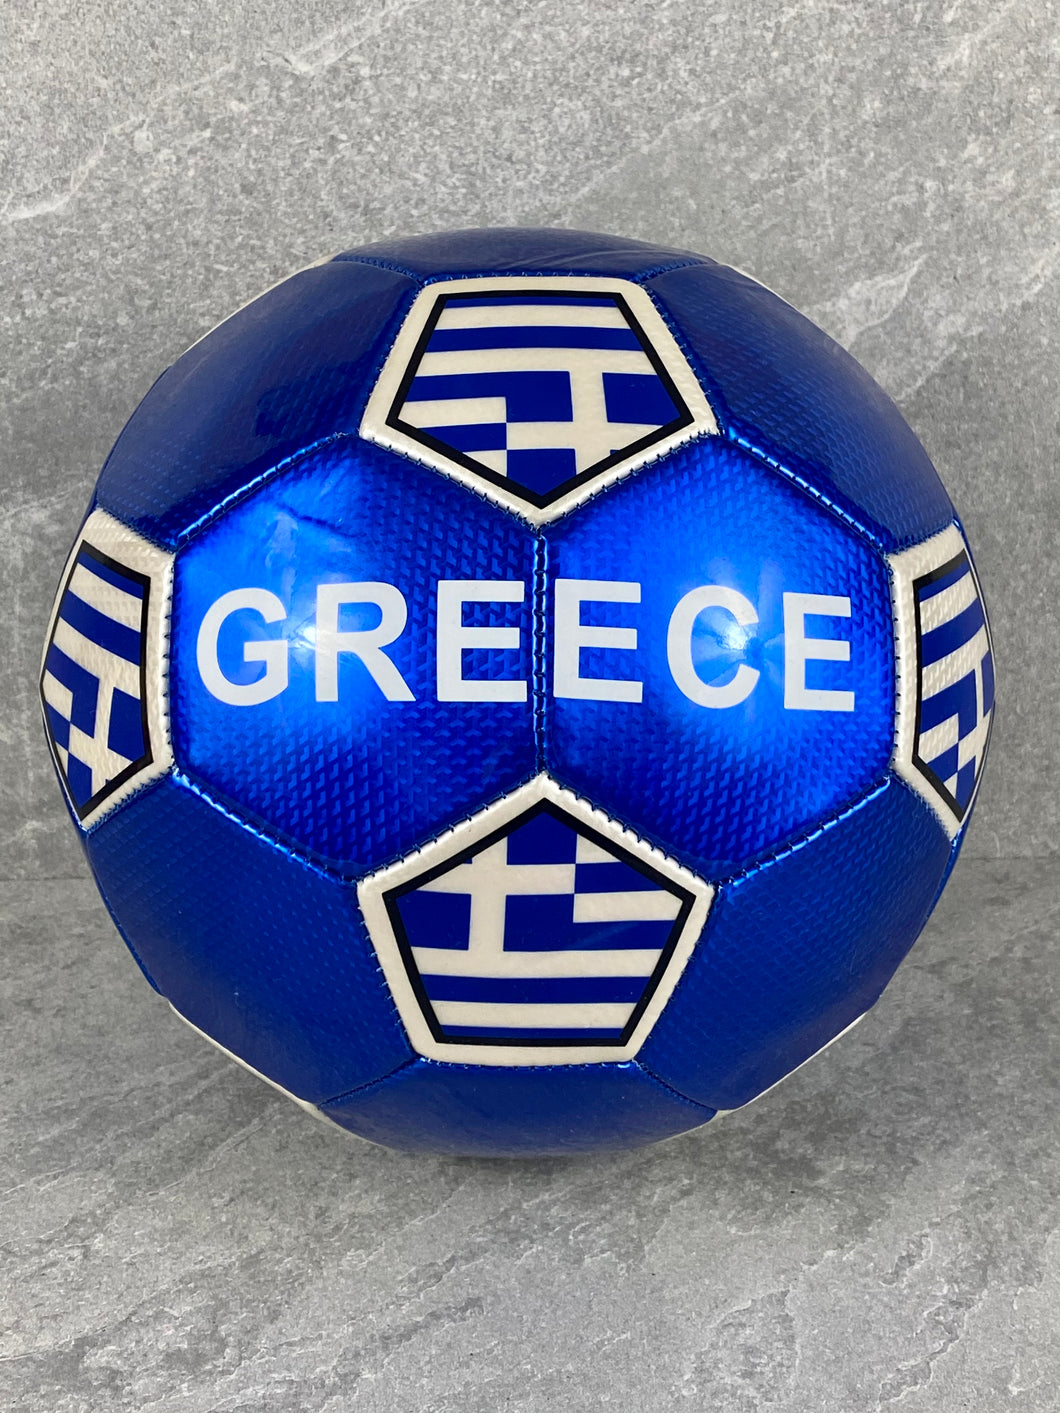 Greece Soccer Ball Size 5